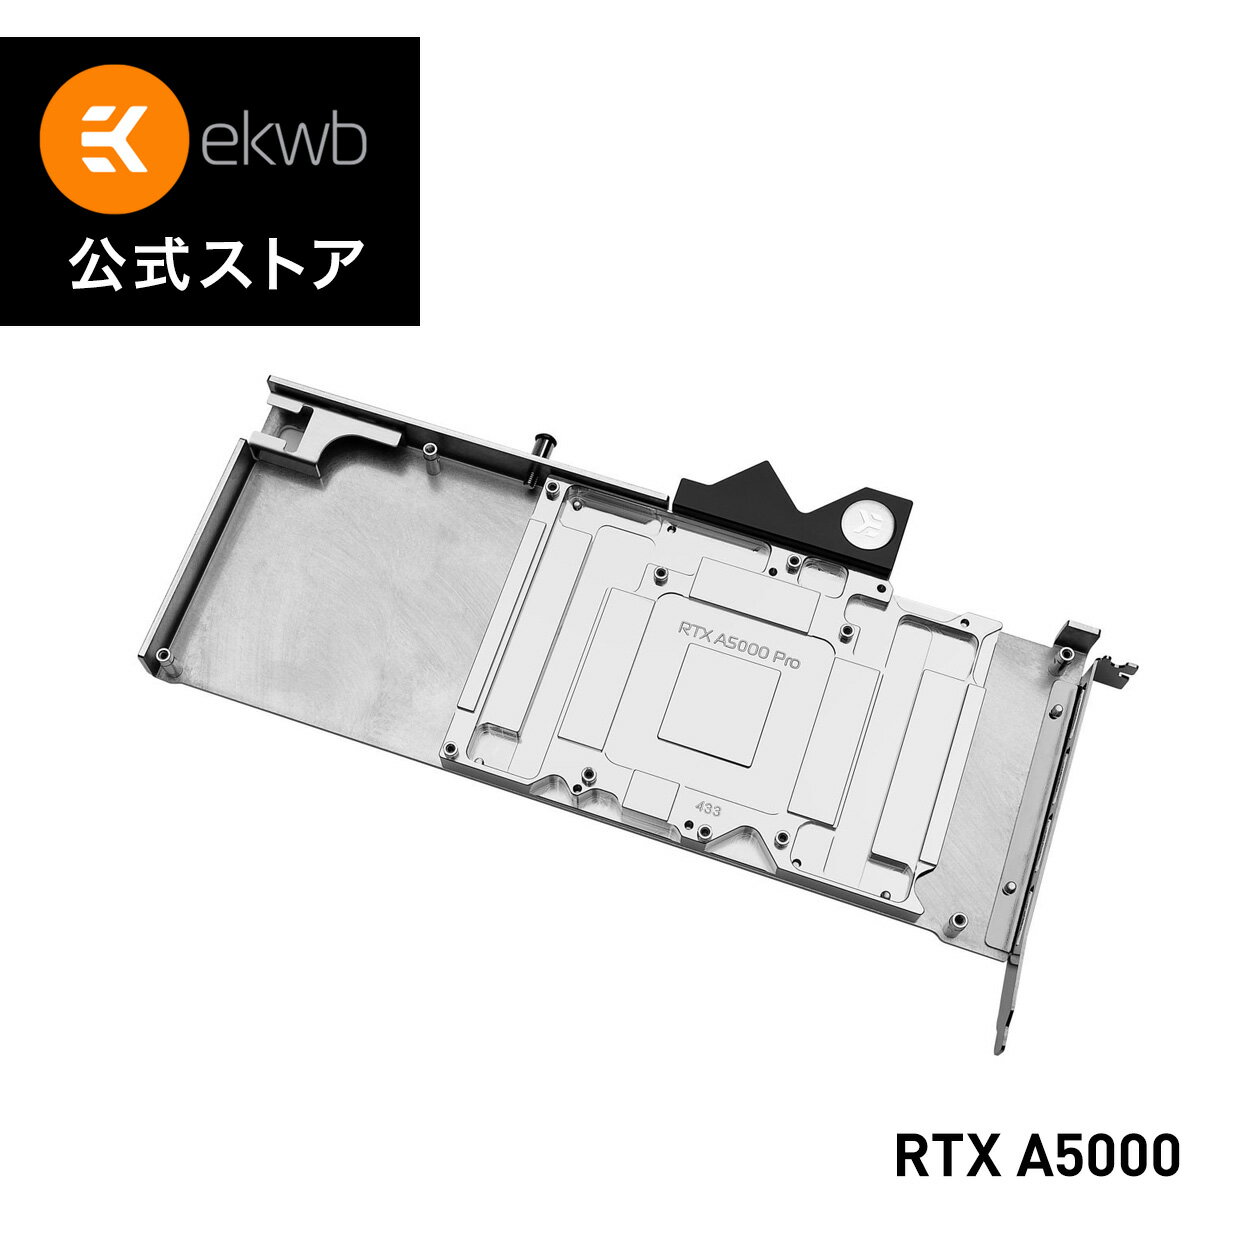 【EKWB公式】EK-Pro GPU WB RTX A5000 Nickel Inox